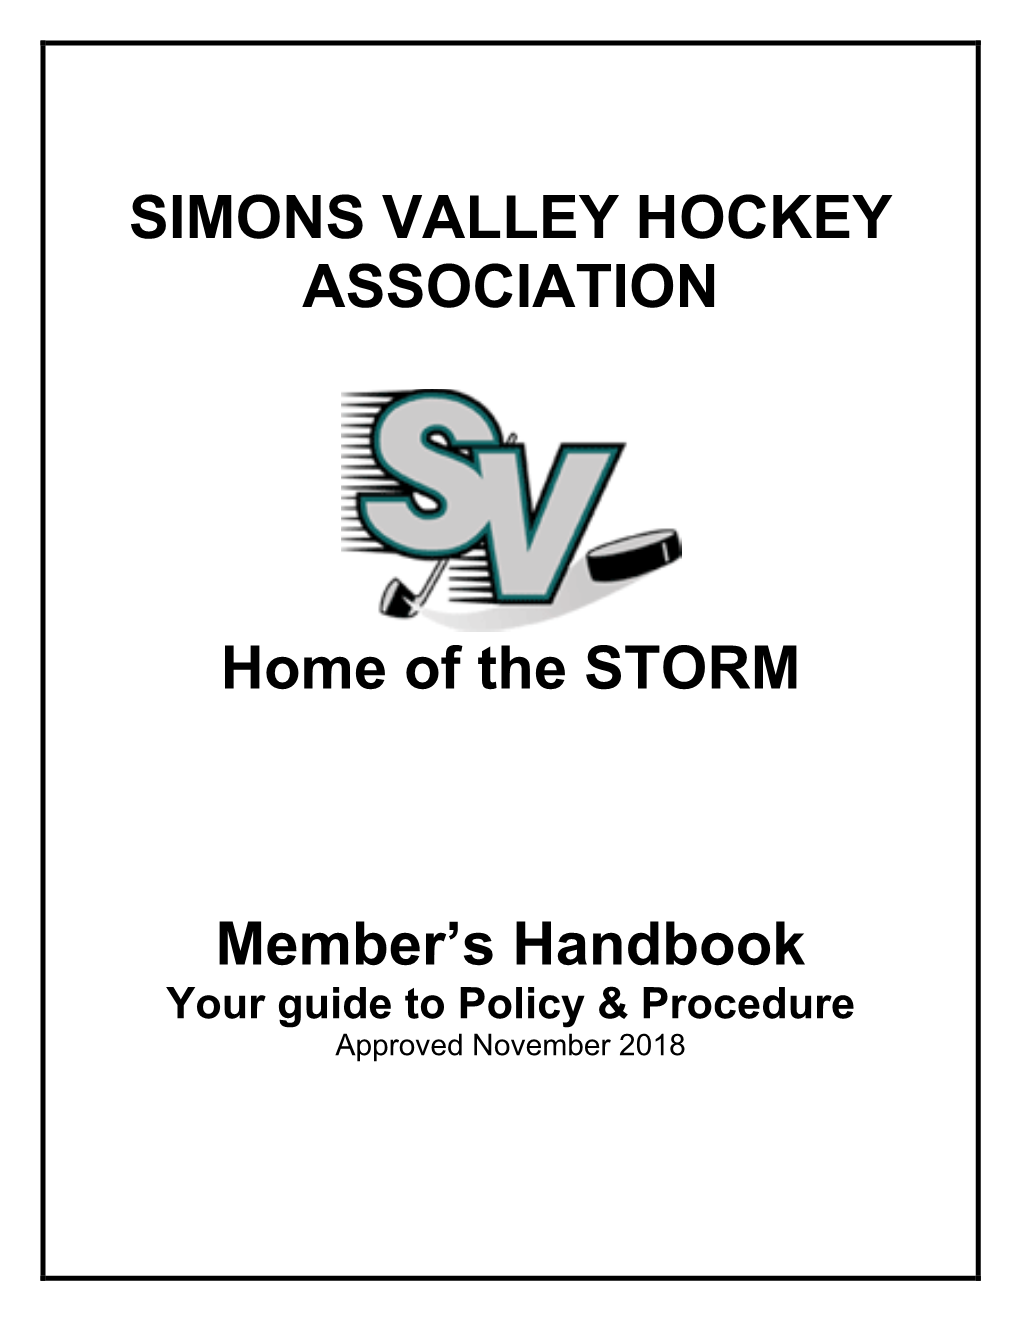 SVHA Members Handbook